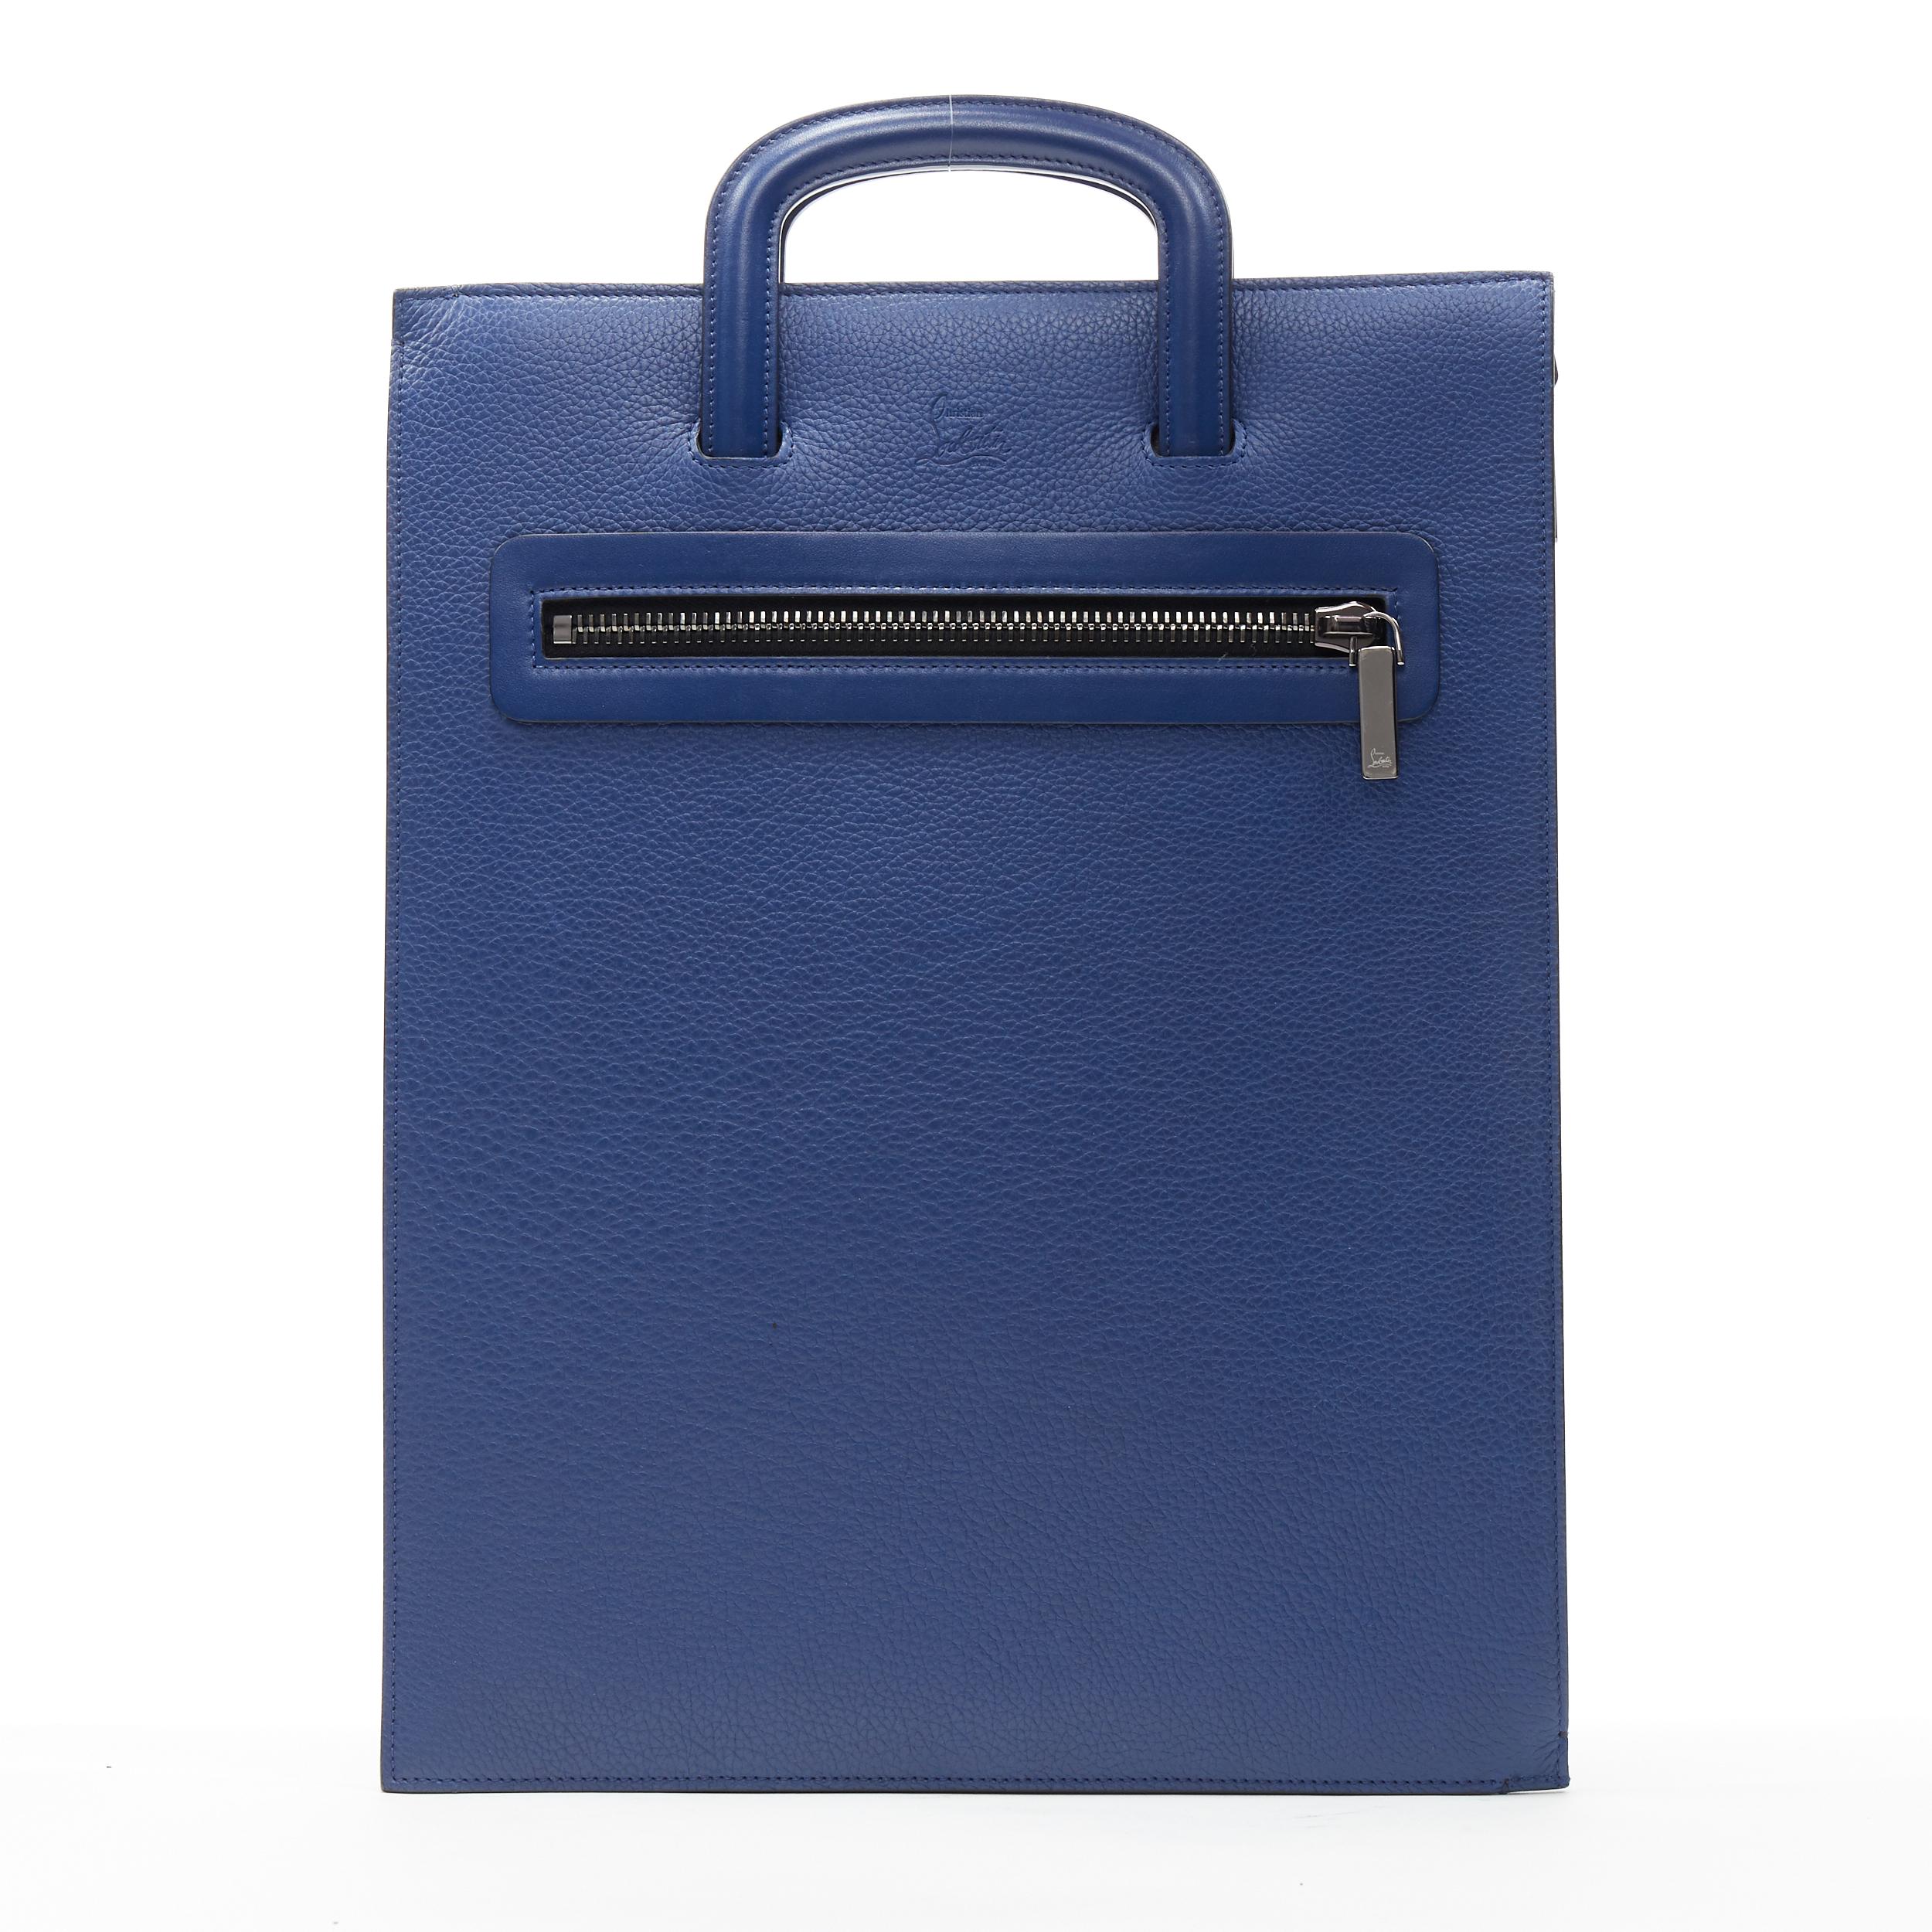 Blue CHRISTIAN LOUBOUTIN Trictrac blue crest studded leather side zip portfolio bag